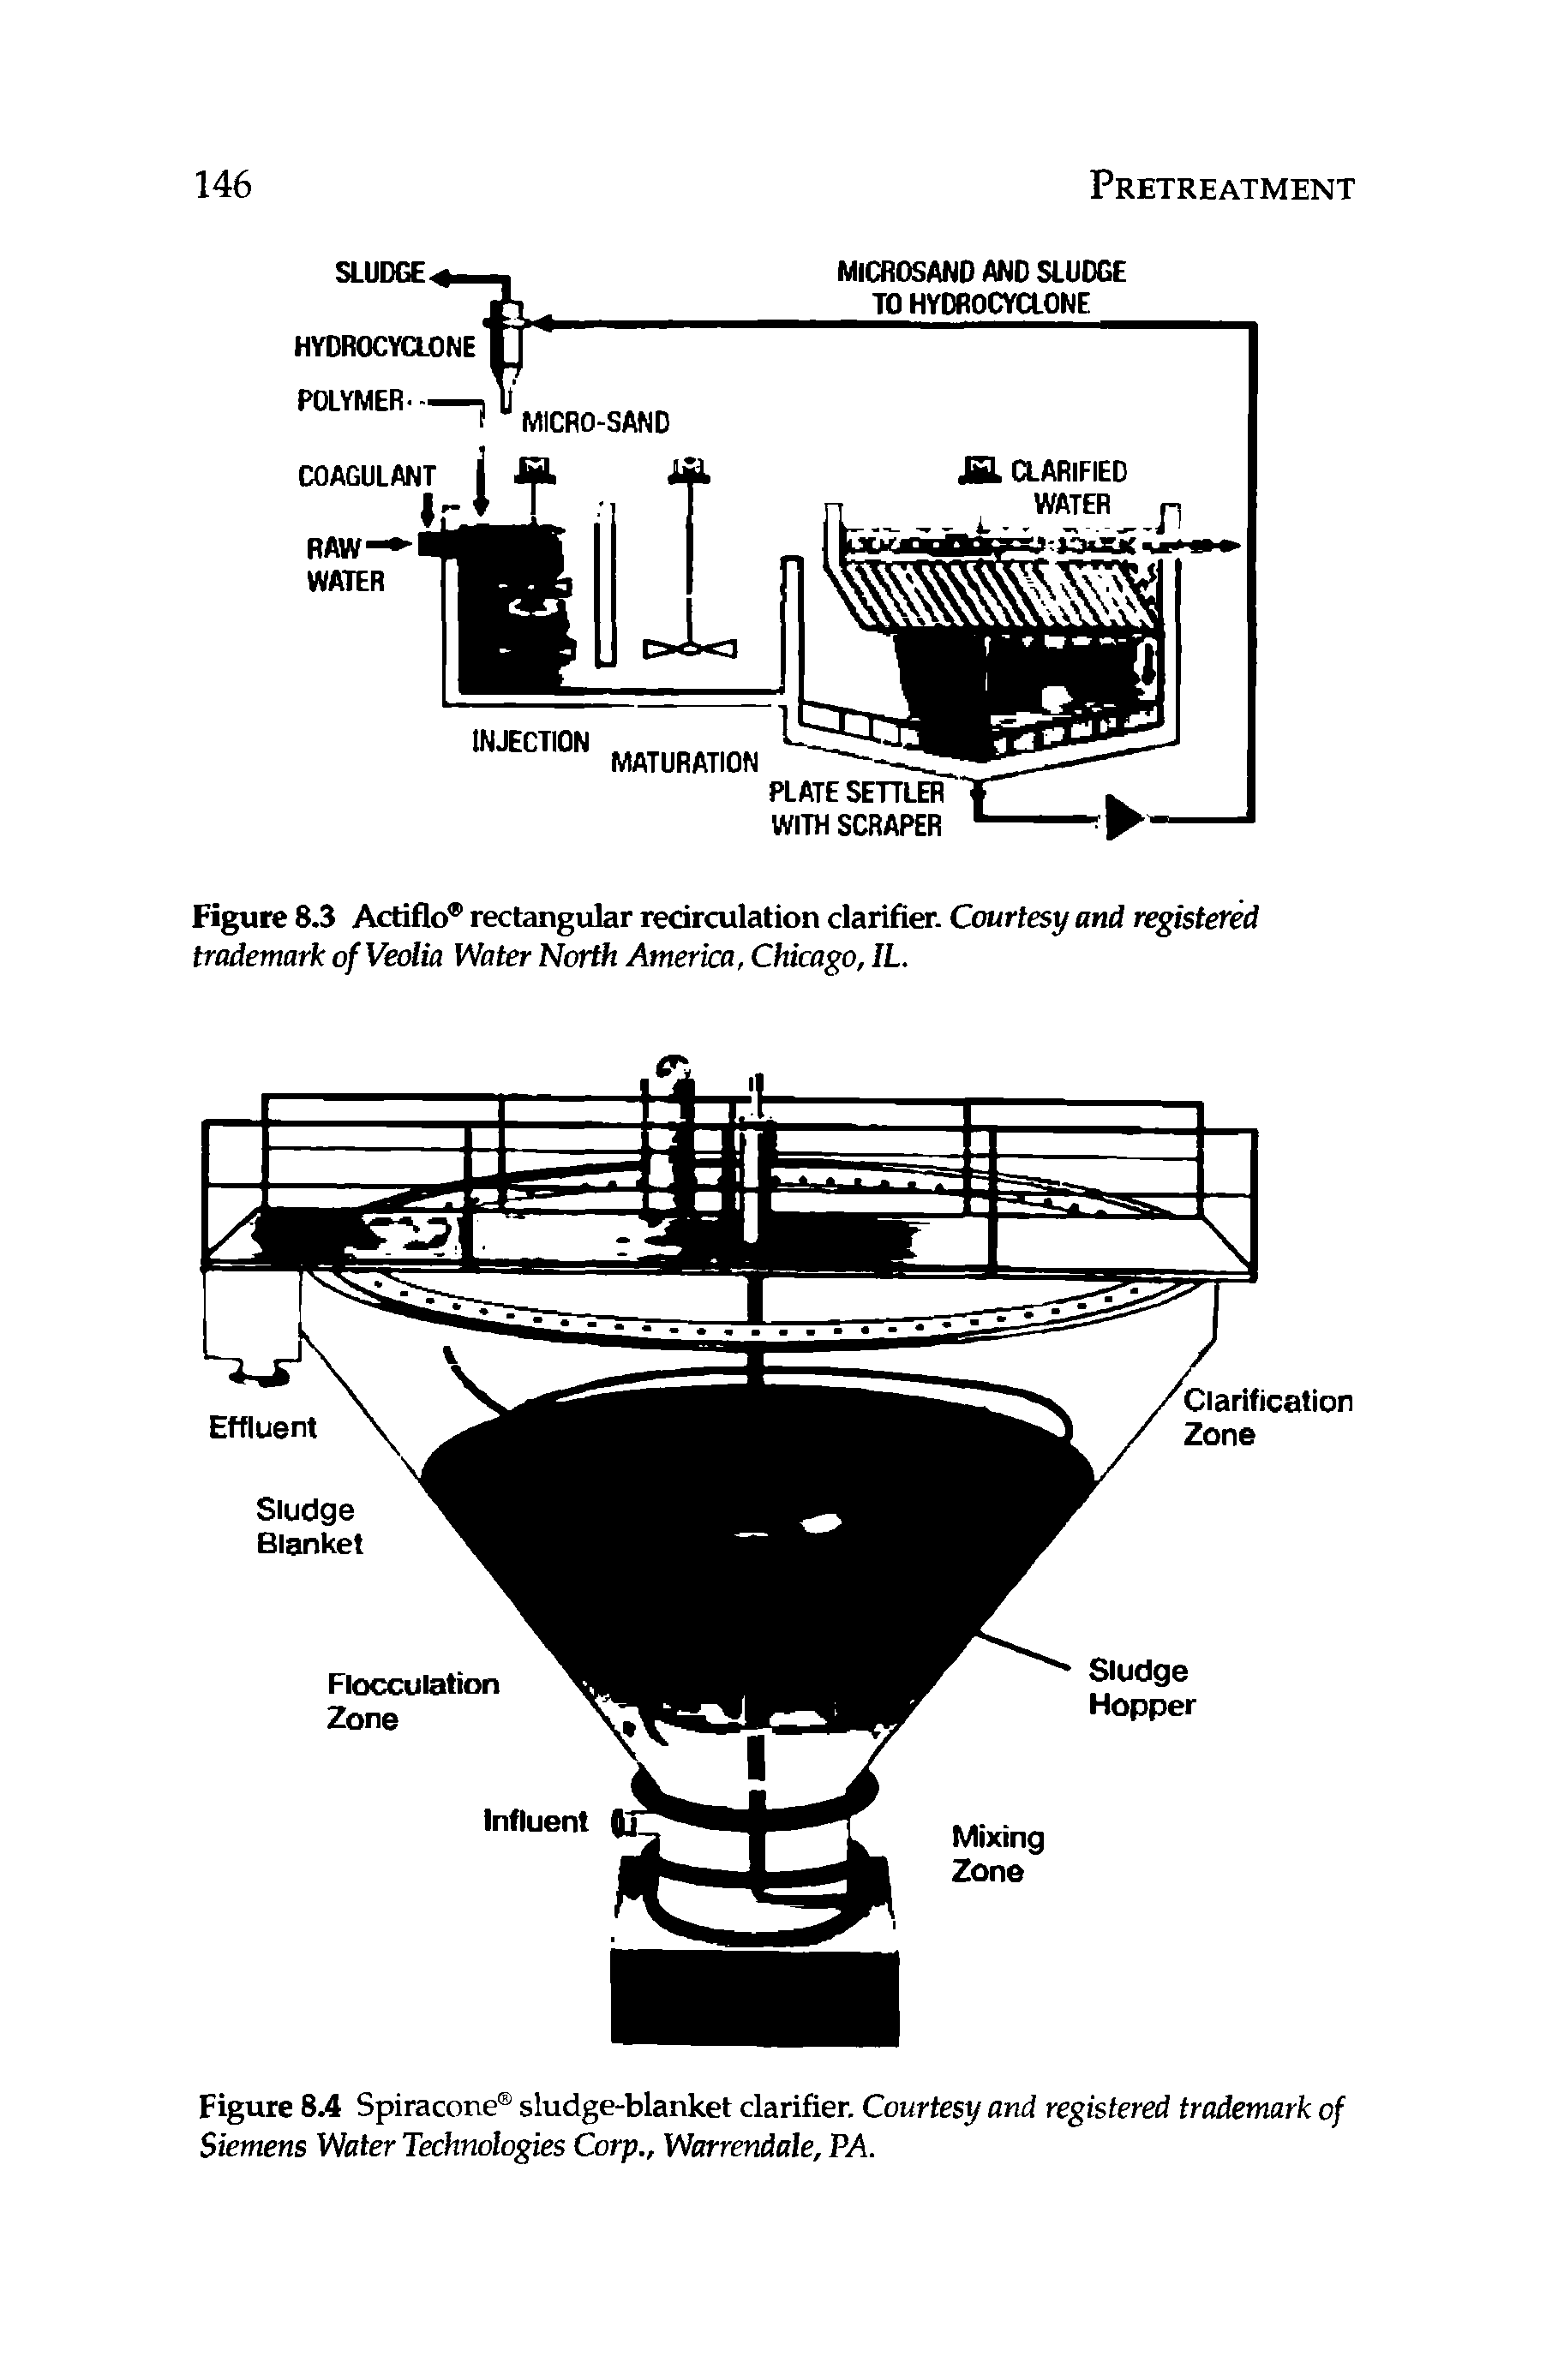 Figure 8.4 Spiracone sludge-blanket clarifier. Courtesy and registered trademark of Siemens Water Technologies Corp., Warrendale, PA.